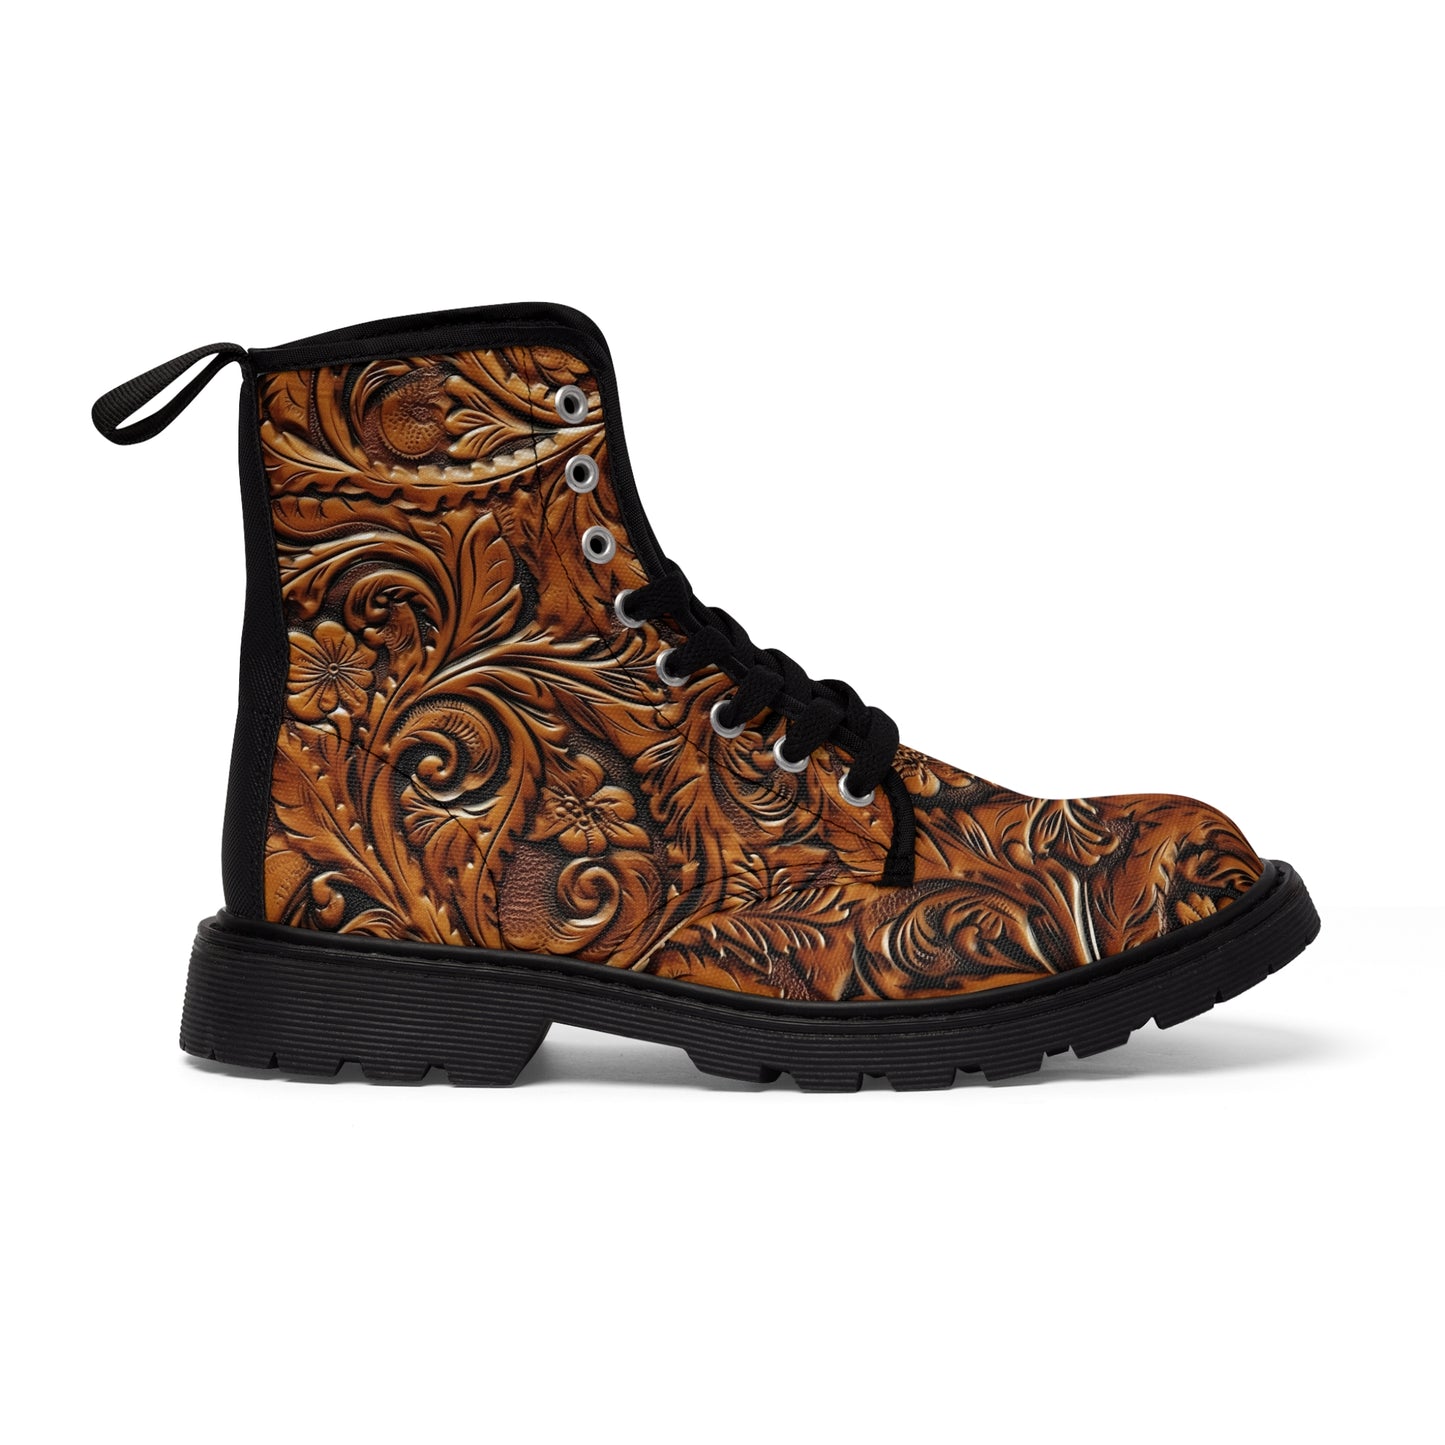 Tooled Leather Men's Canvas Boots (Black) by Studio Ten Design